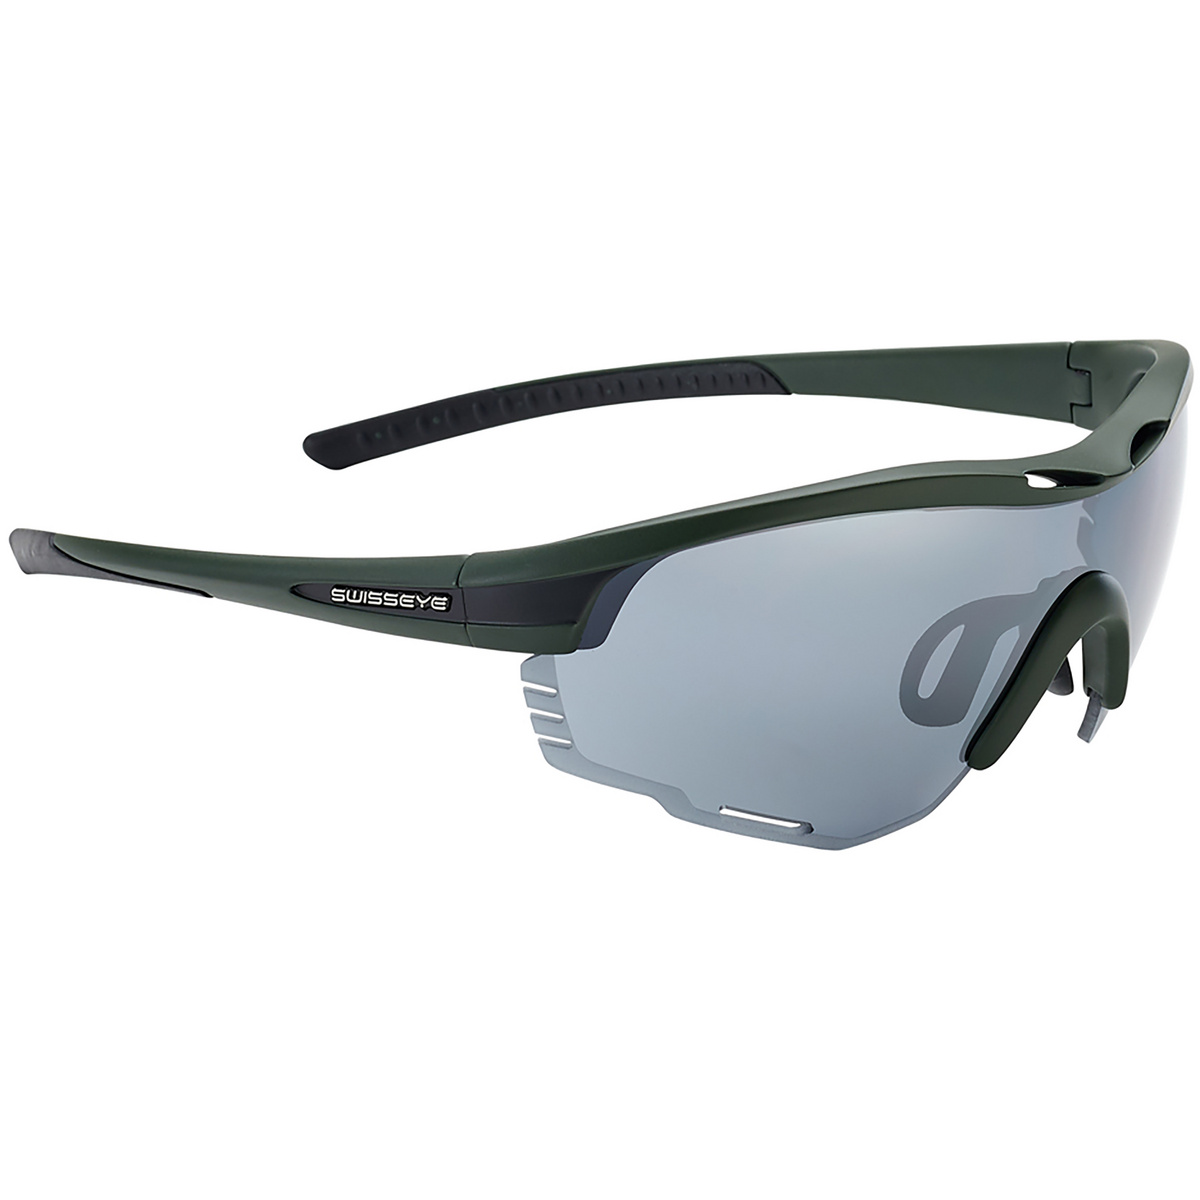 Swiss Eye Novena Re+ Sportbrille (Größe One Size, oliv)